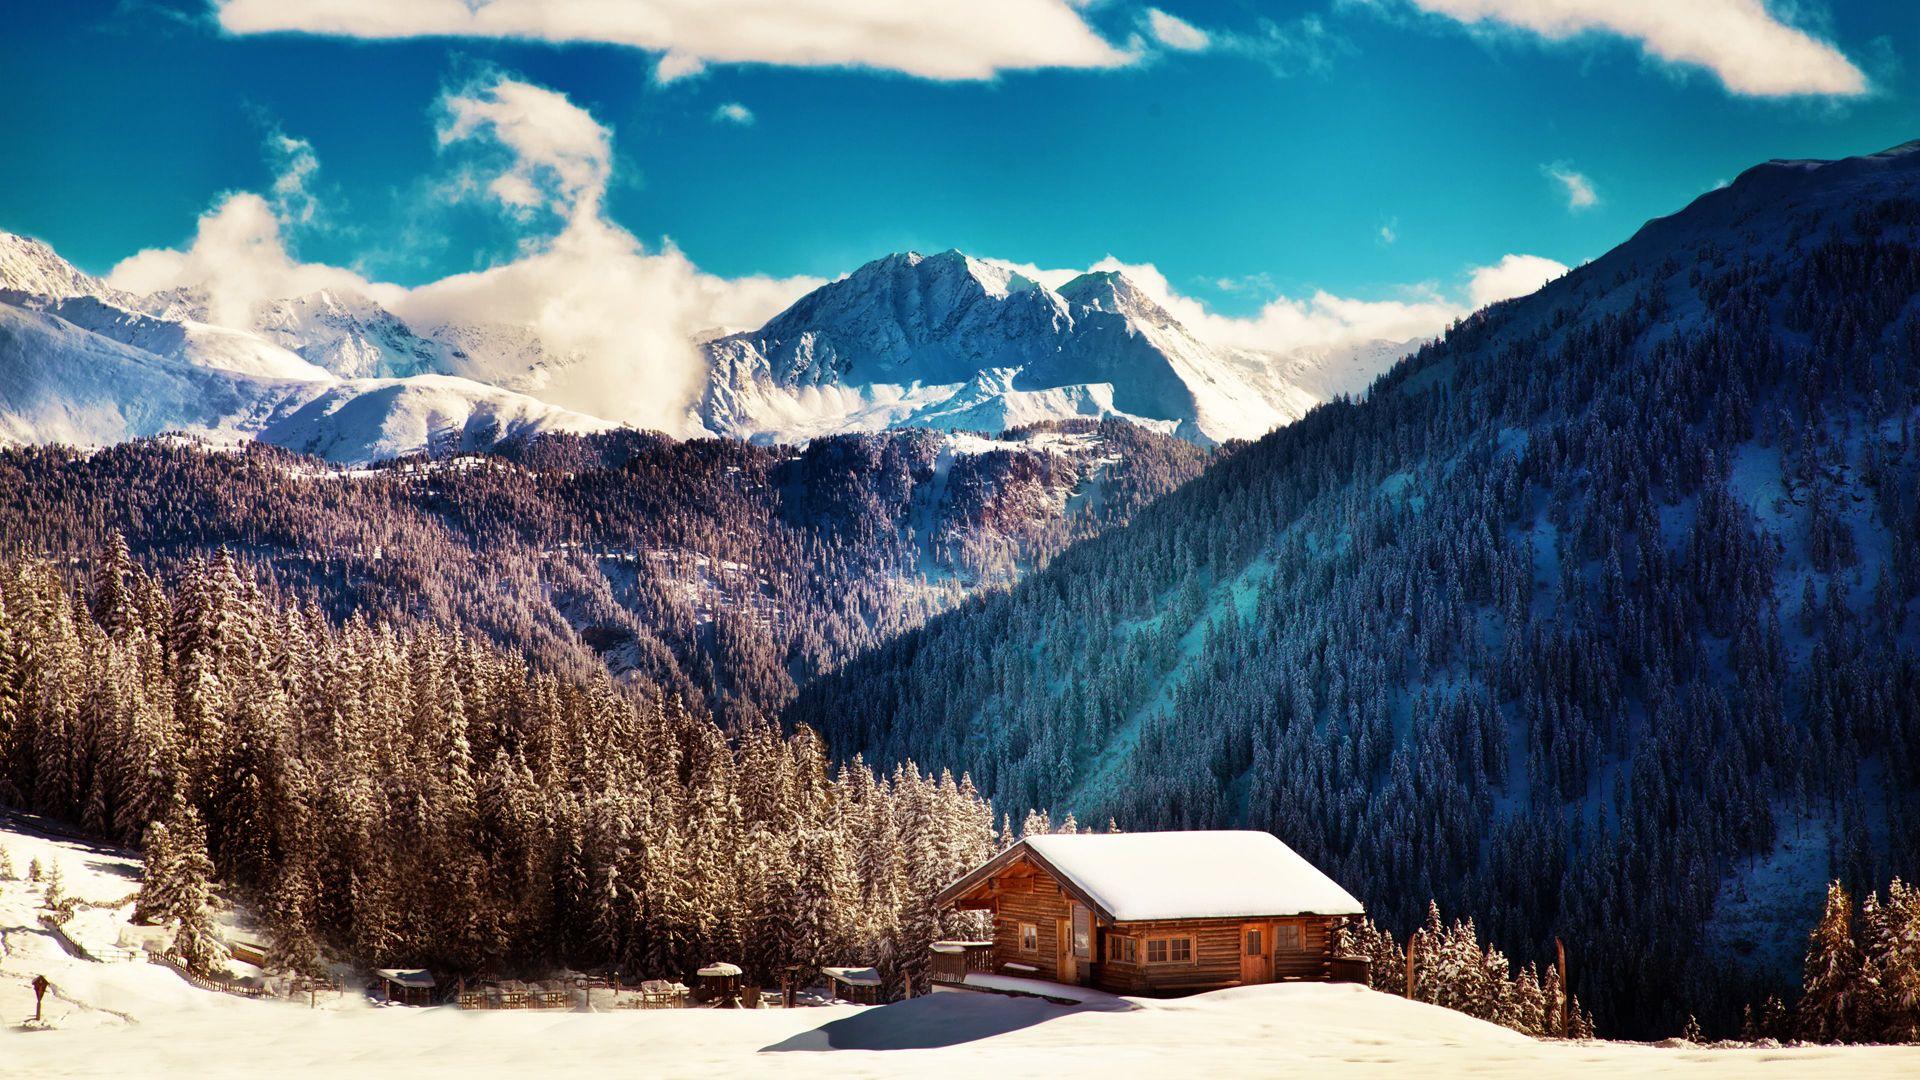 Austria Winter Wallpapers - Top Free Austria Winter Backgrounds ...